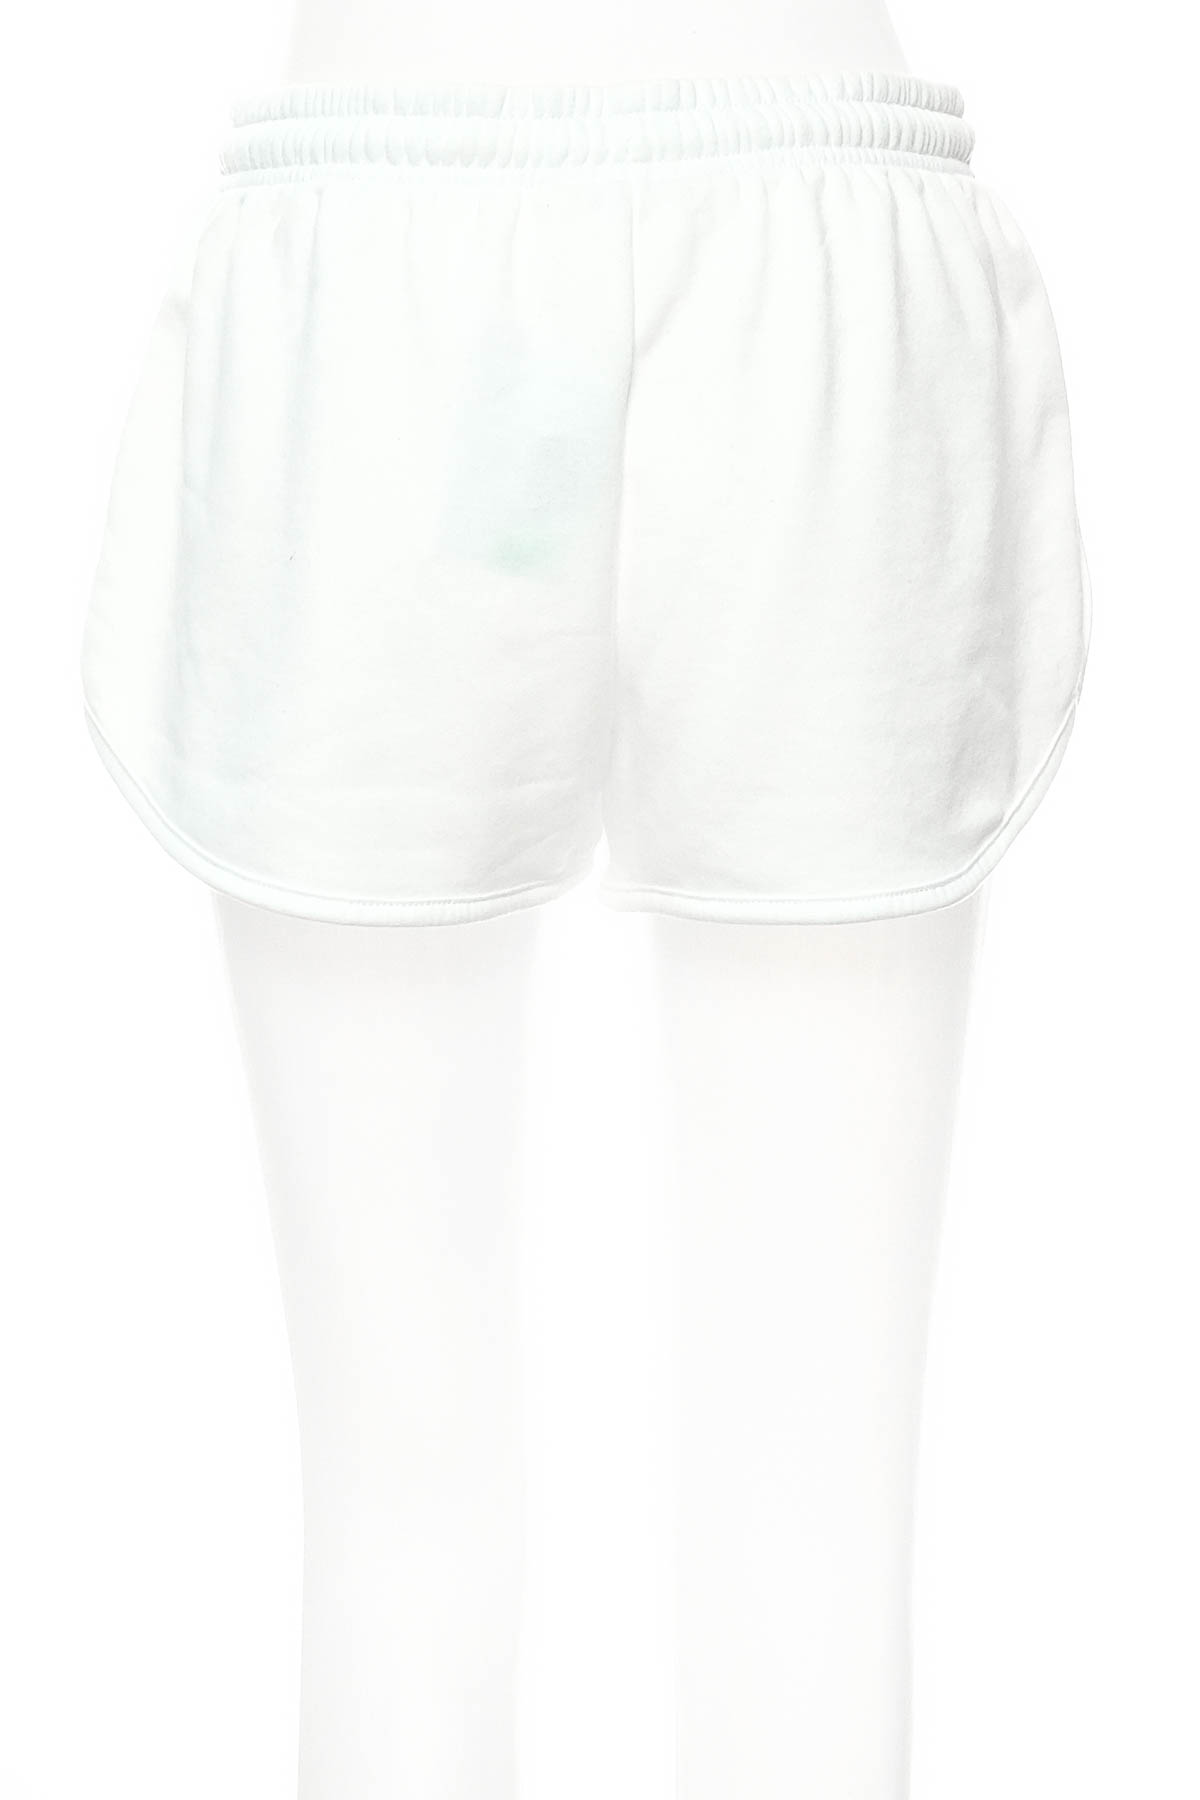 Female shorts - PRIMARK - 1